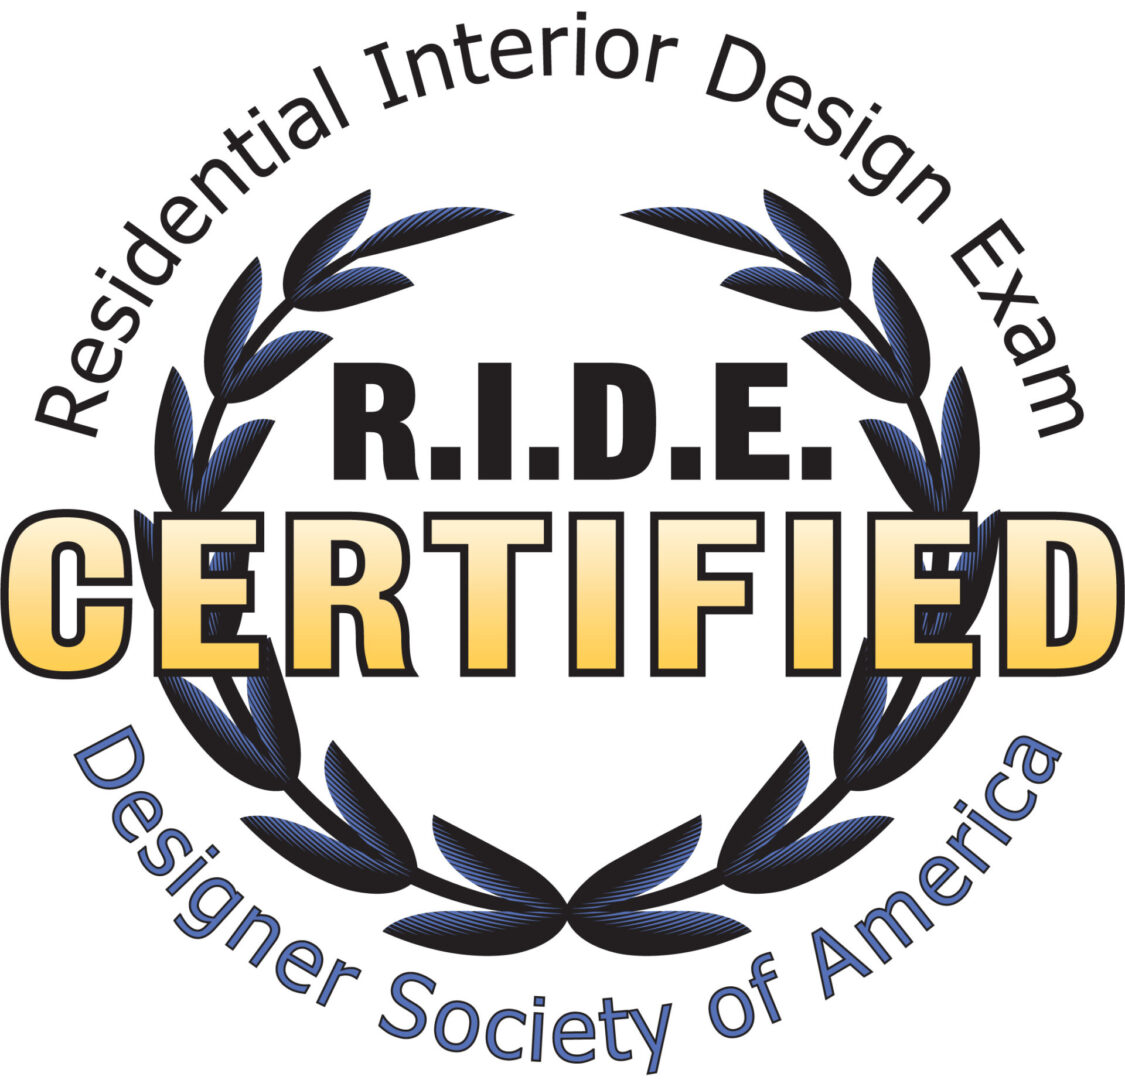 A certified residential interior design exam